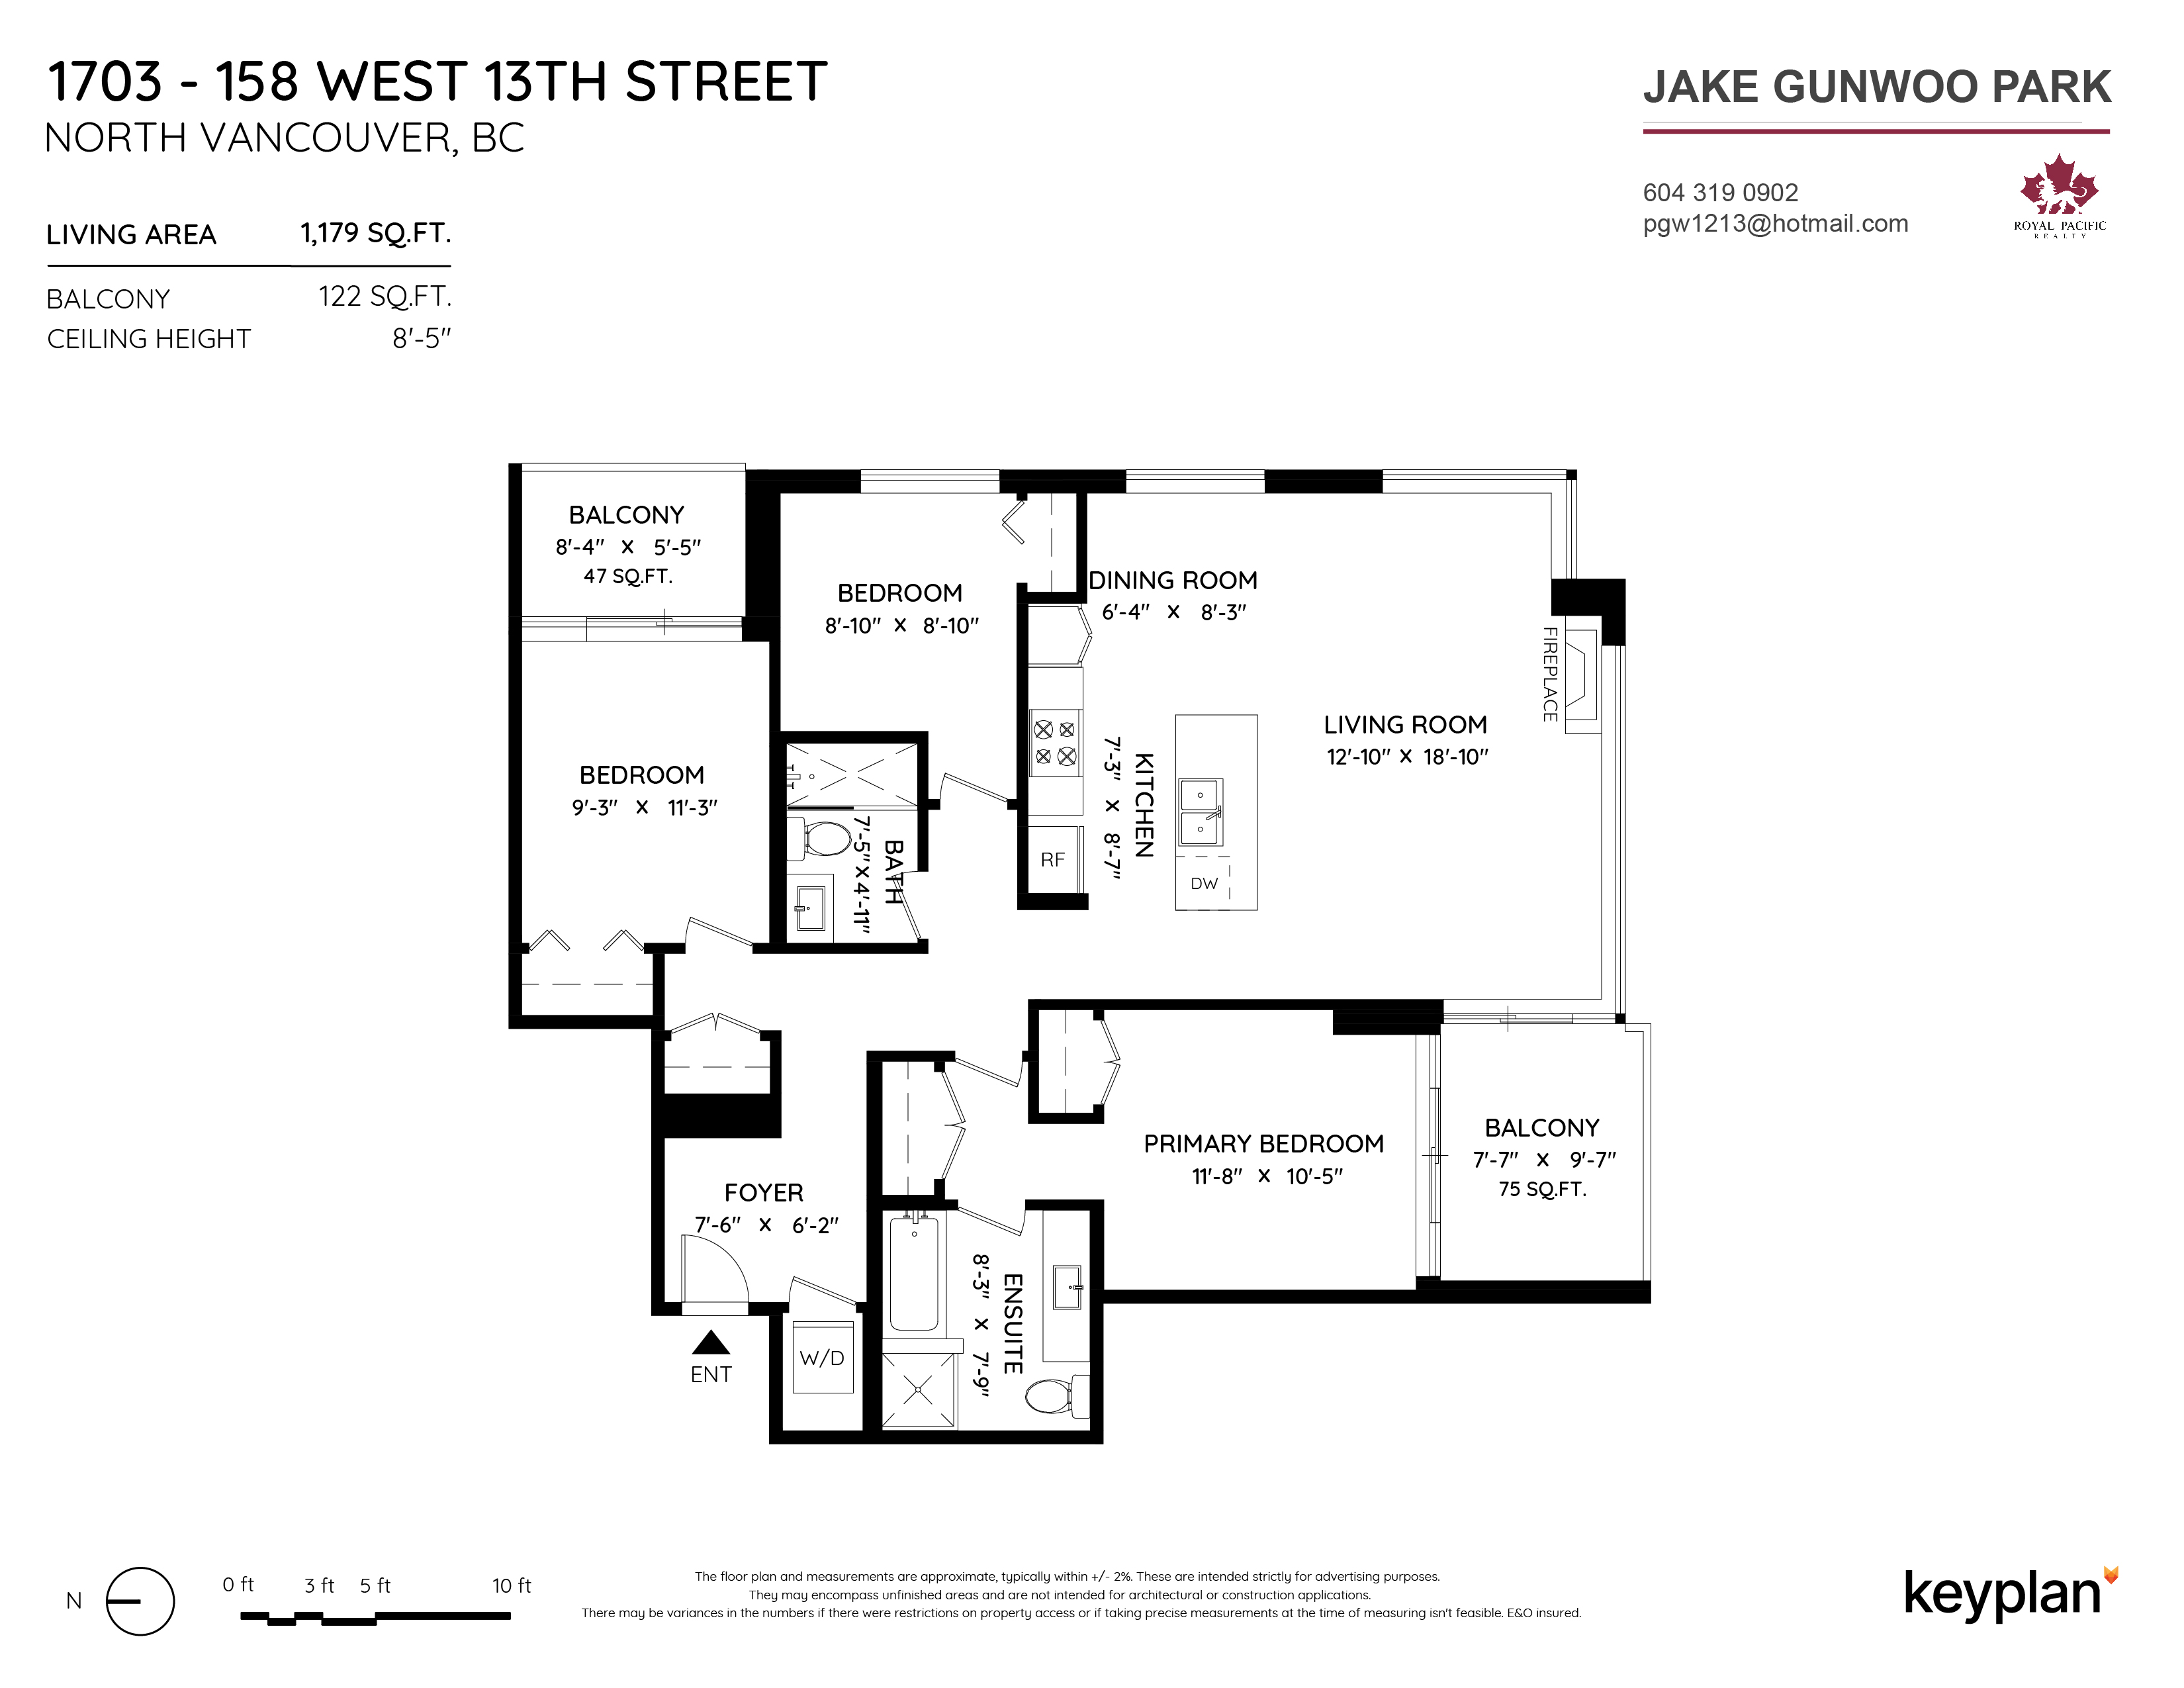 Jake Gunwoo Park - Unit 1703 - 158 13th Street West, North Vancouver, BC, Canada | Floor Plan 1